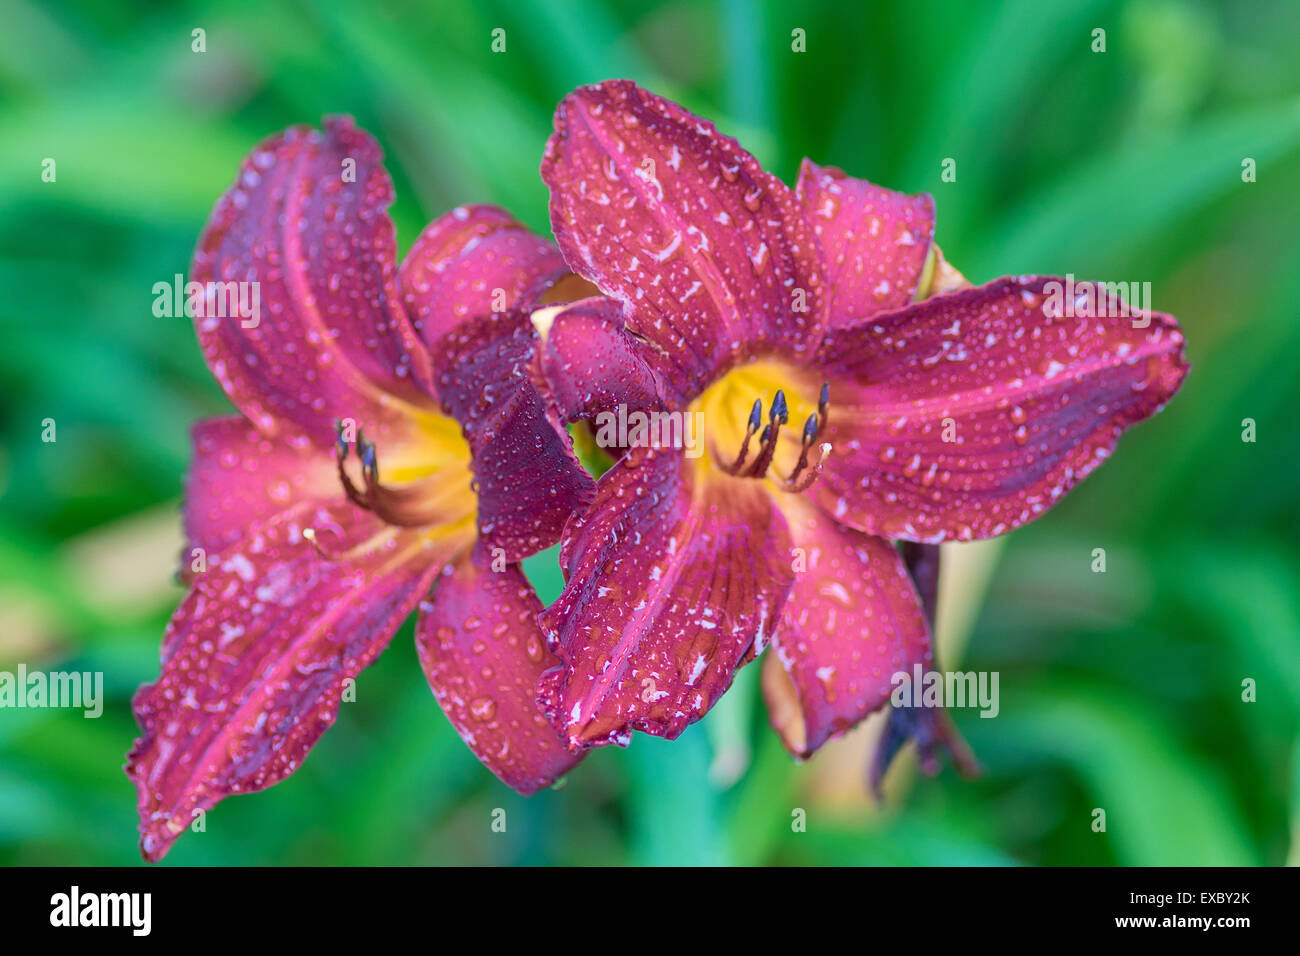 Two crimson lily flowers in raindrops Hemerocallis Stock Photo